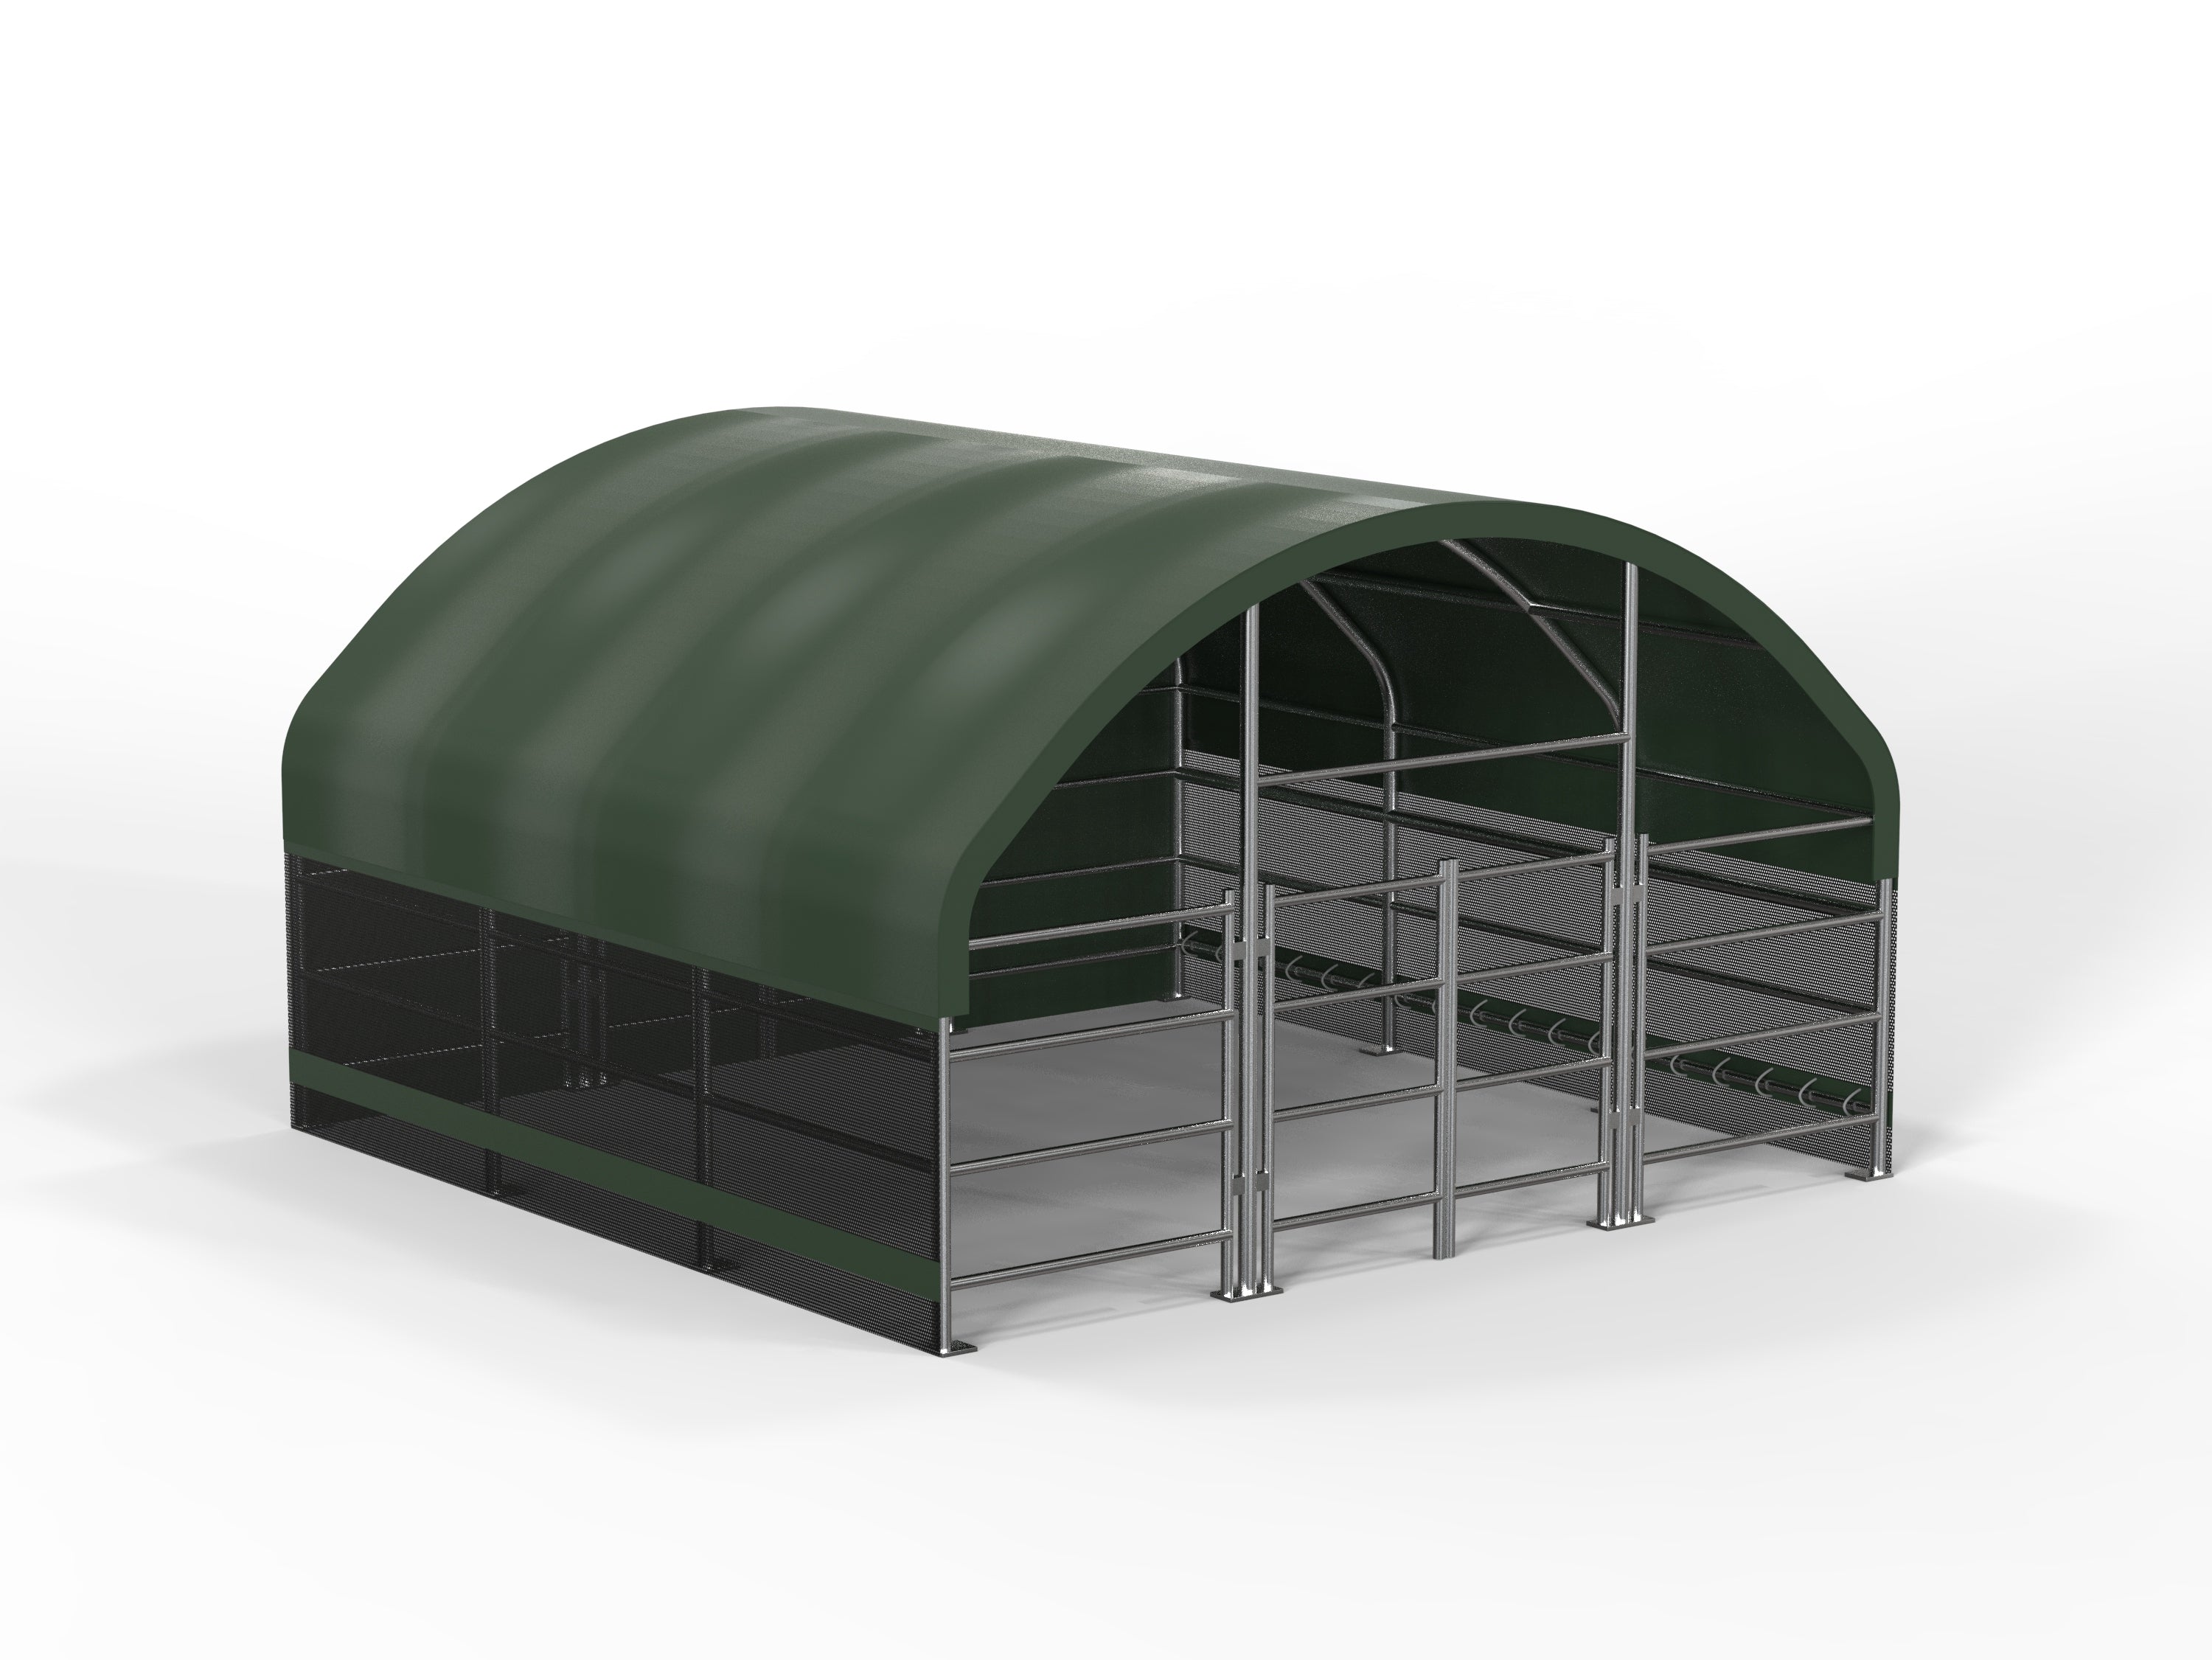 4m x 4m x2.4m (LxWxH) Enclosed livestock shelter - Green